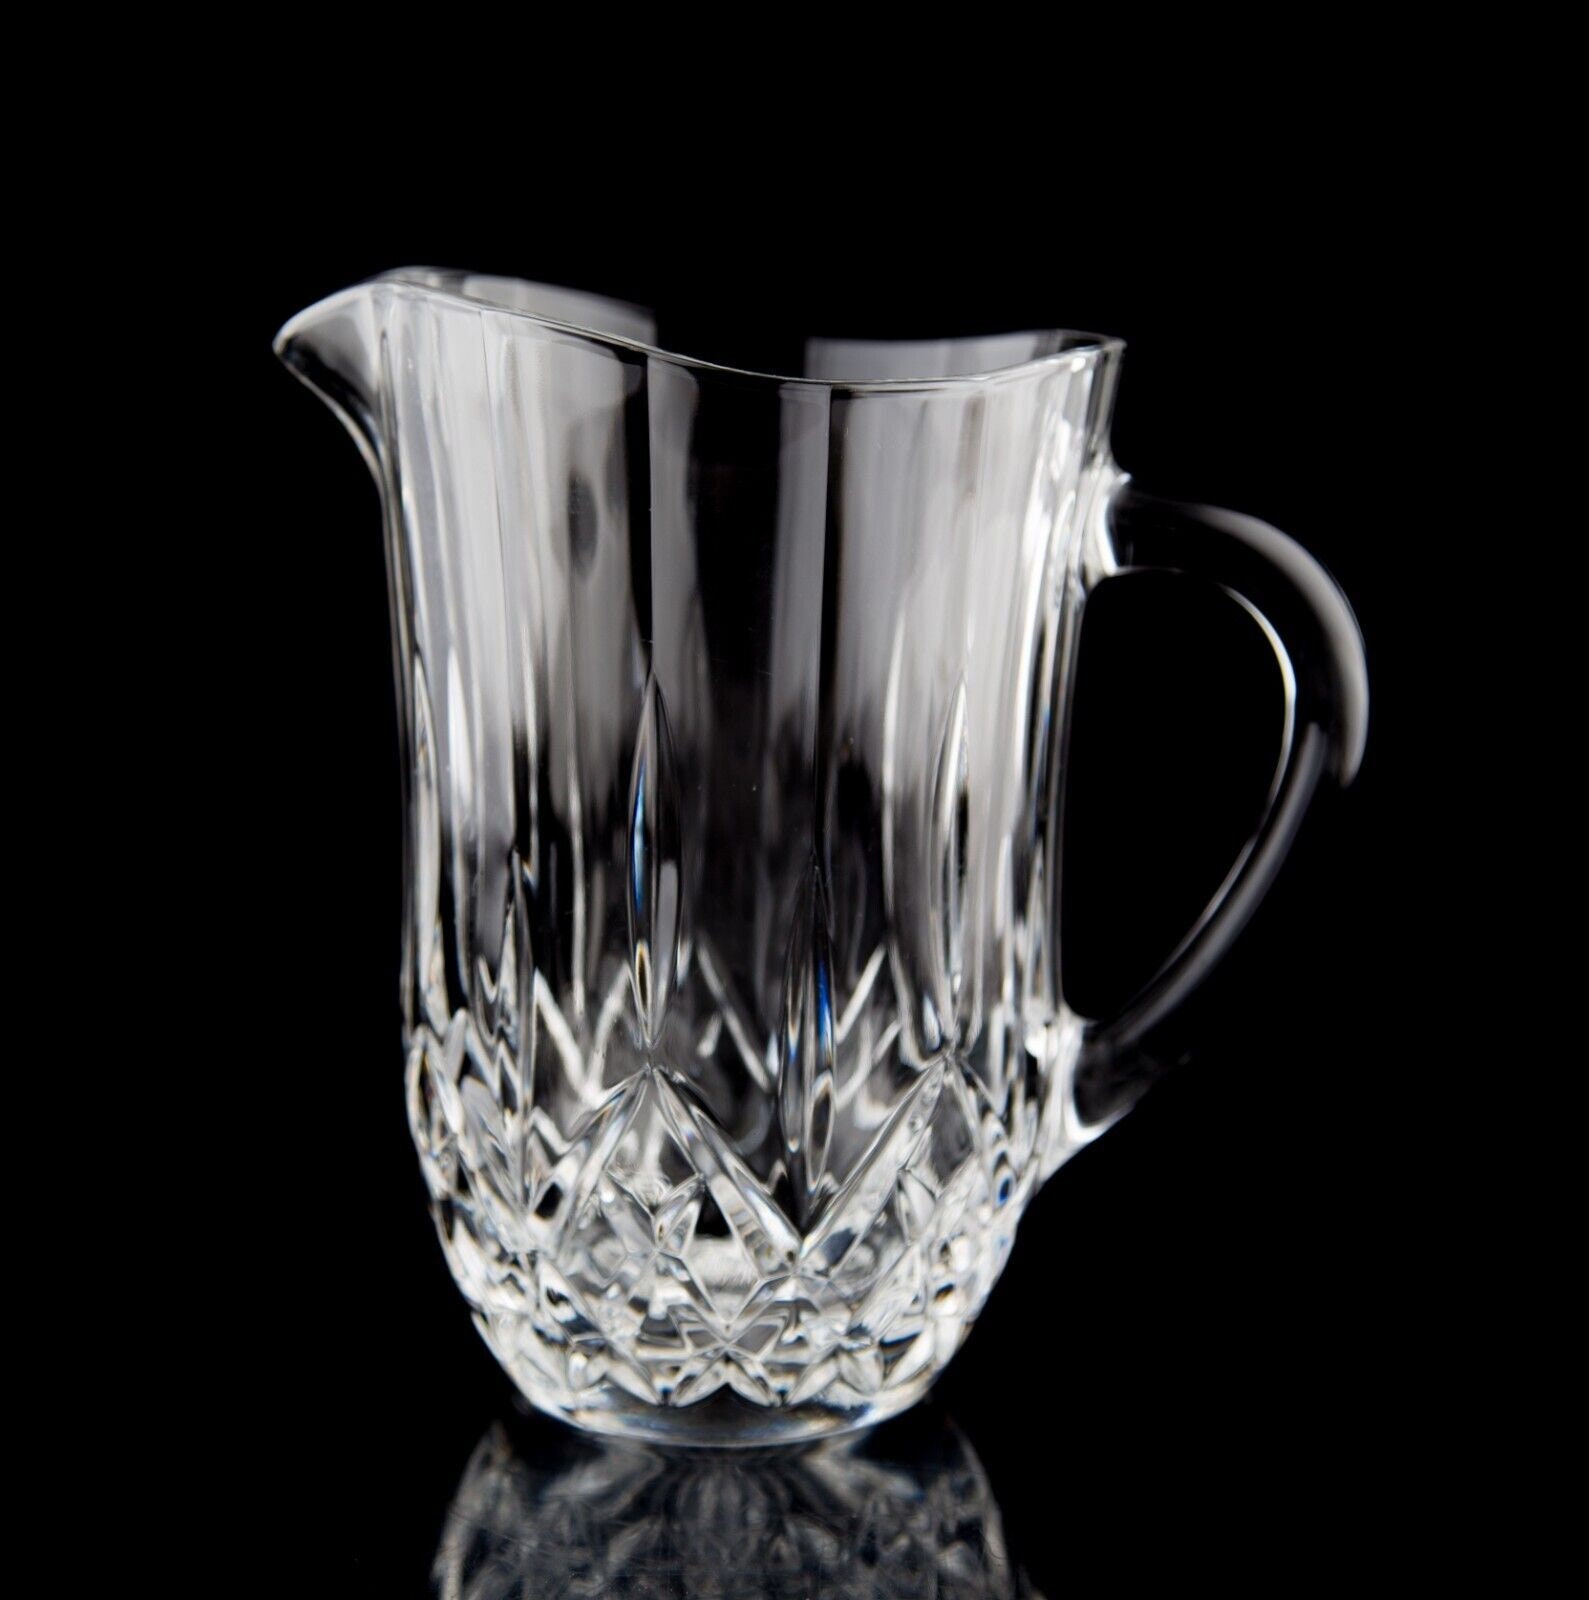 Leinuosen 2 Pcs Small Glass Pitcher Elegant Shaped Crystal Glass